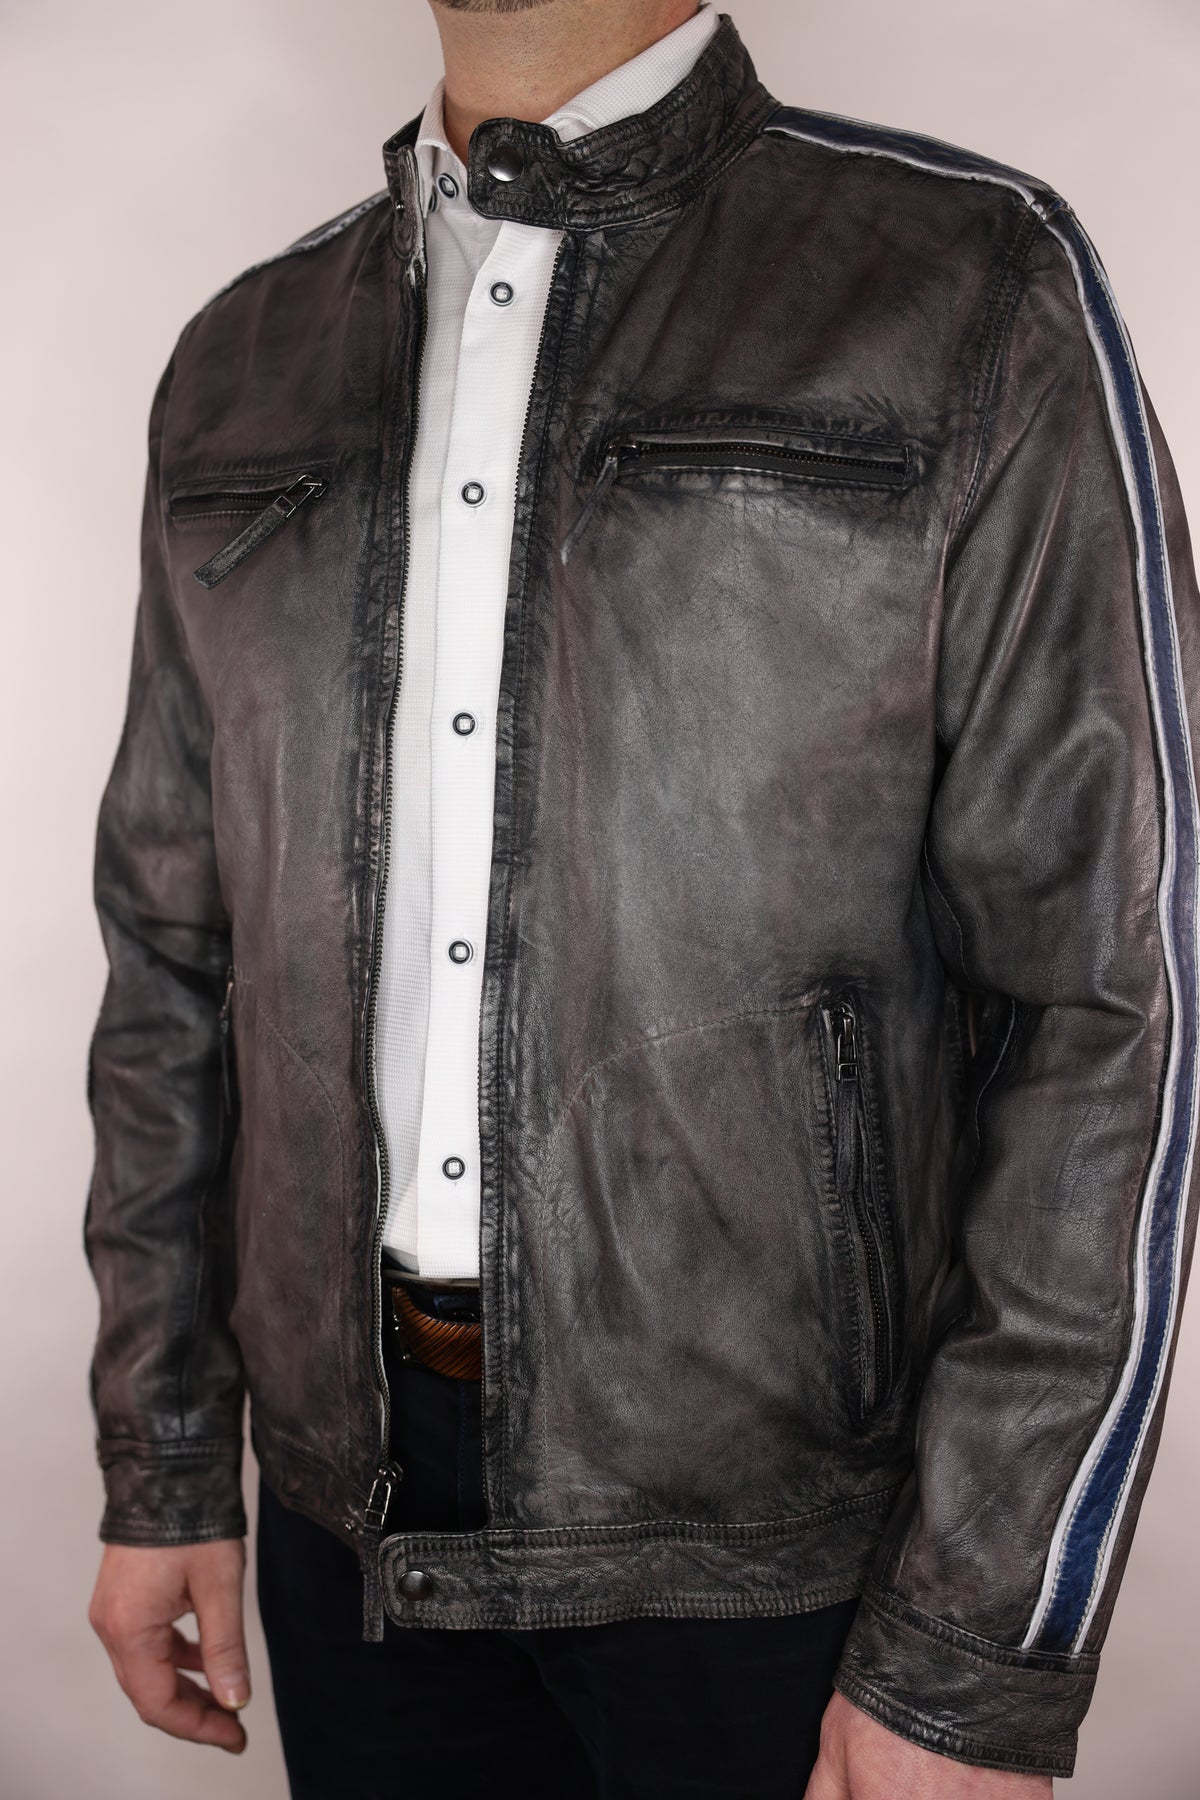 Regency Oasis Leather Racecar Jacket